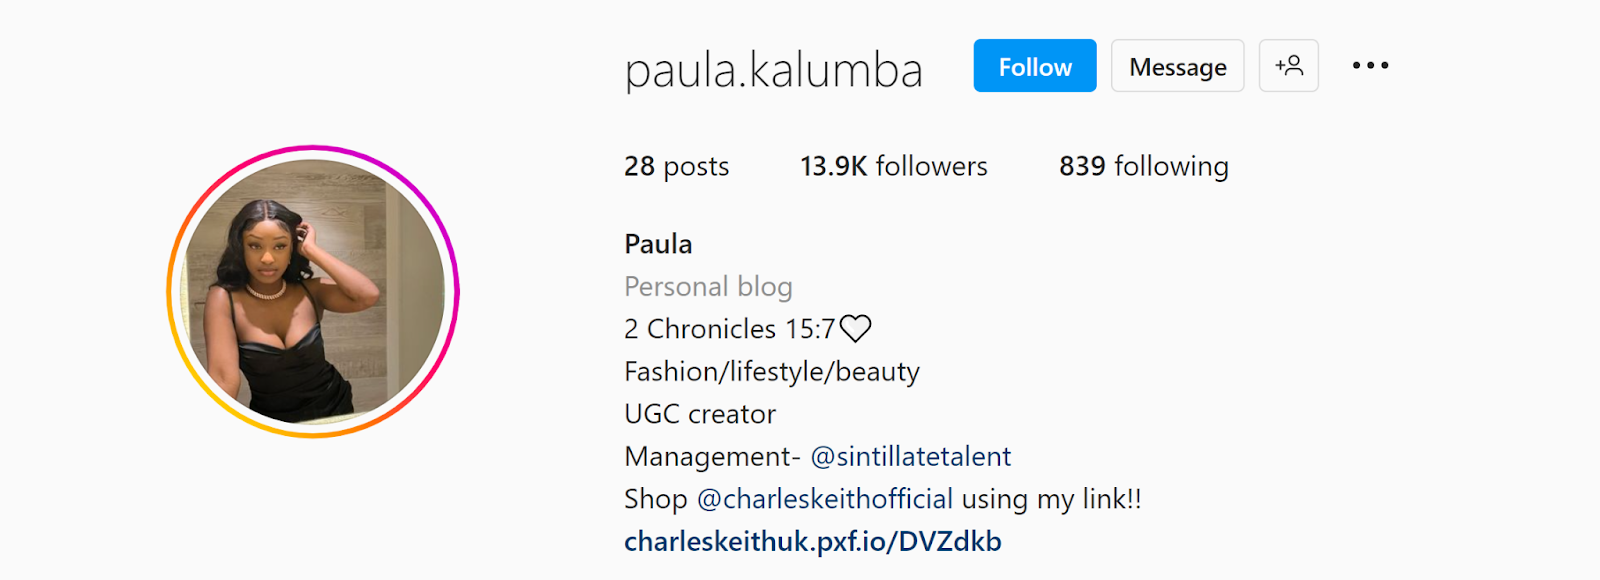 Lifestyle & Fashion Influencer Paula Kalumba on Overcoming Social Anxiety Online 